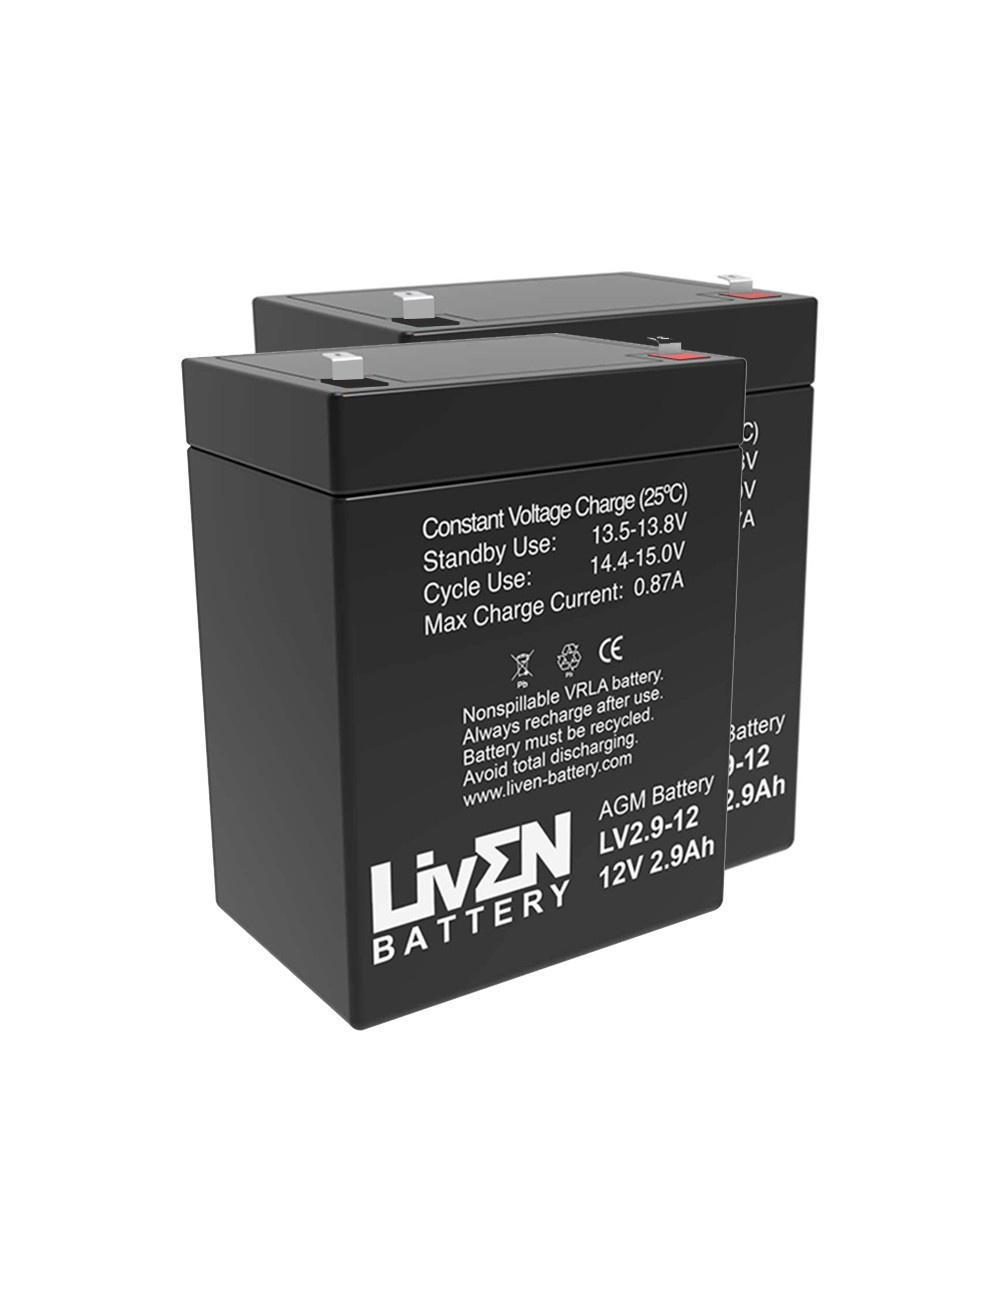 Pack de 2 baterías (24V) para grúa Tecnimoem Powerlift Up 2 de 12V 2,9Ah C20 Liven LV2.9-12 - 2xLV2.9-12 -  -  - 1